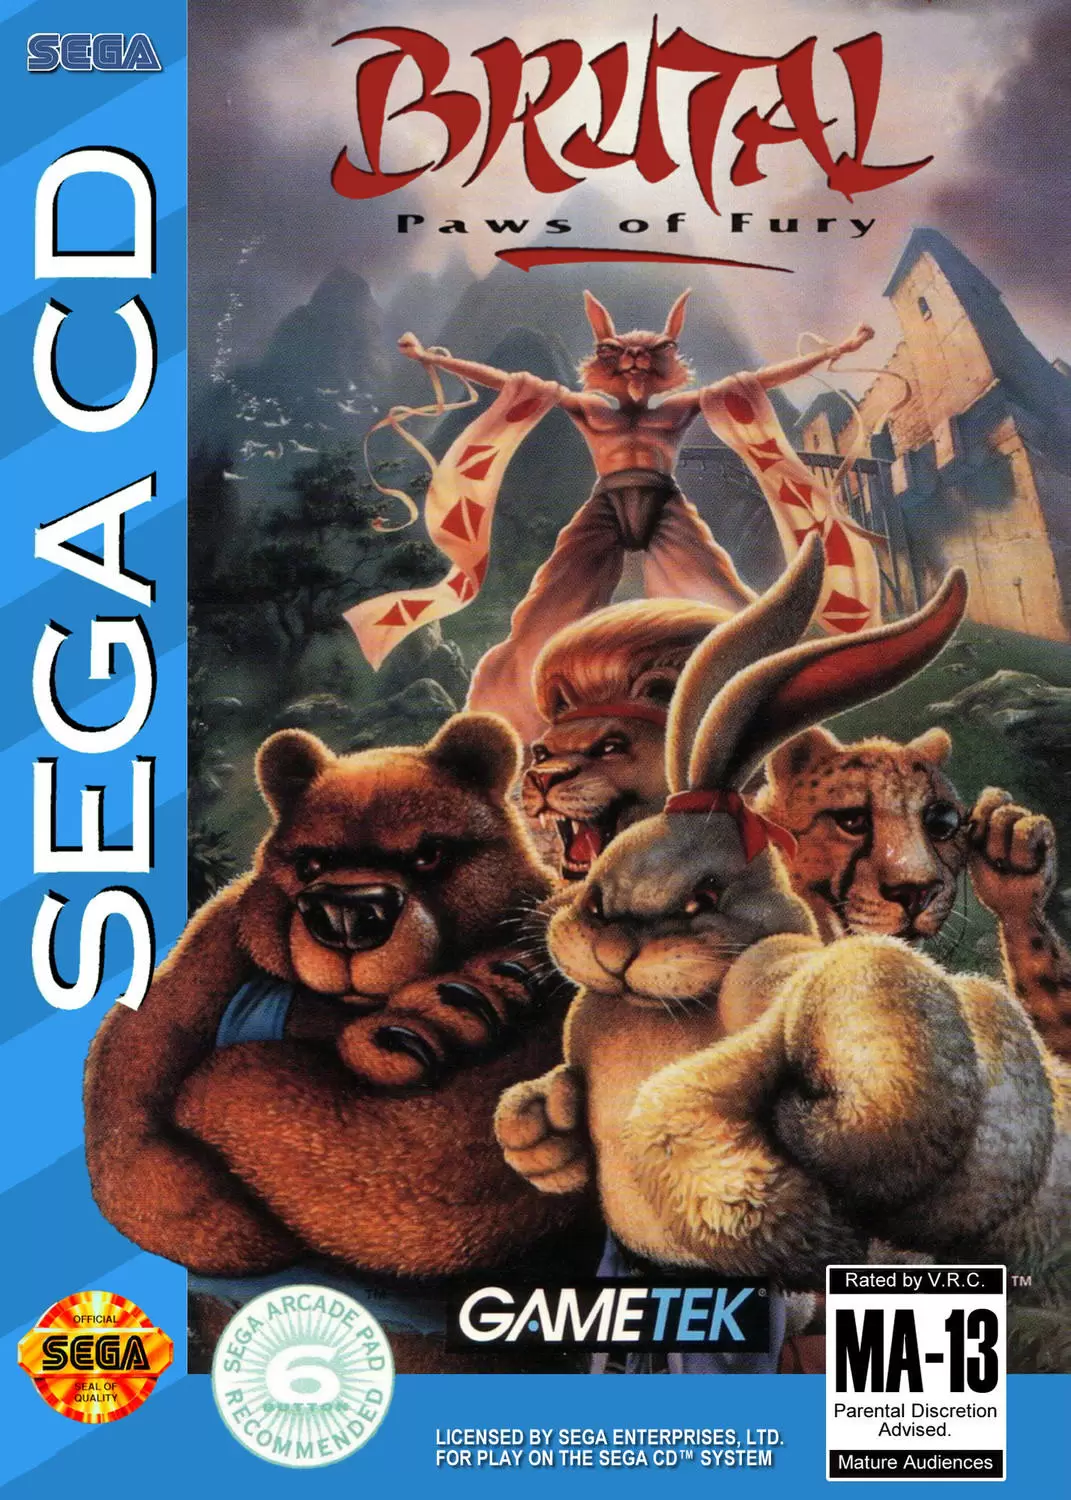 SEGA Mega CD Games - Brutal: Paws of Fury